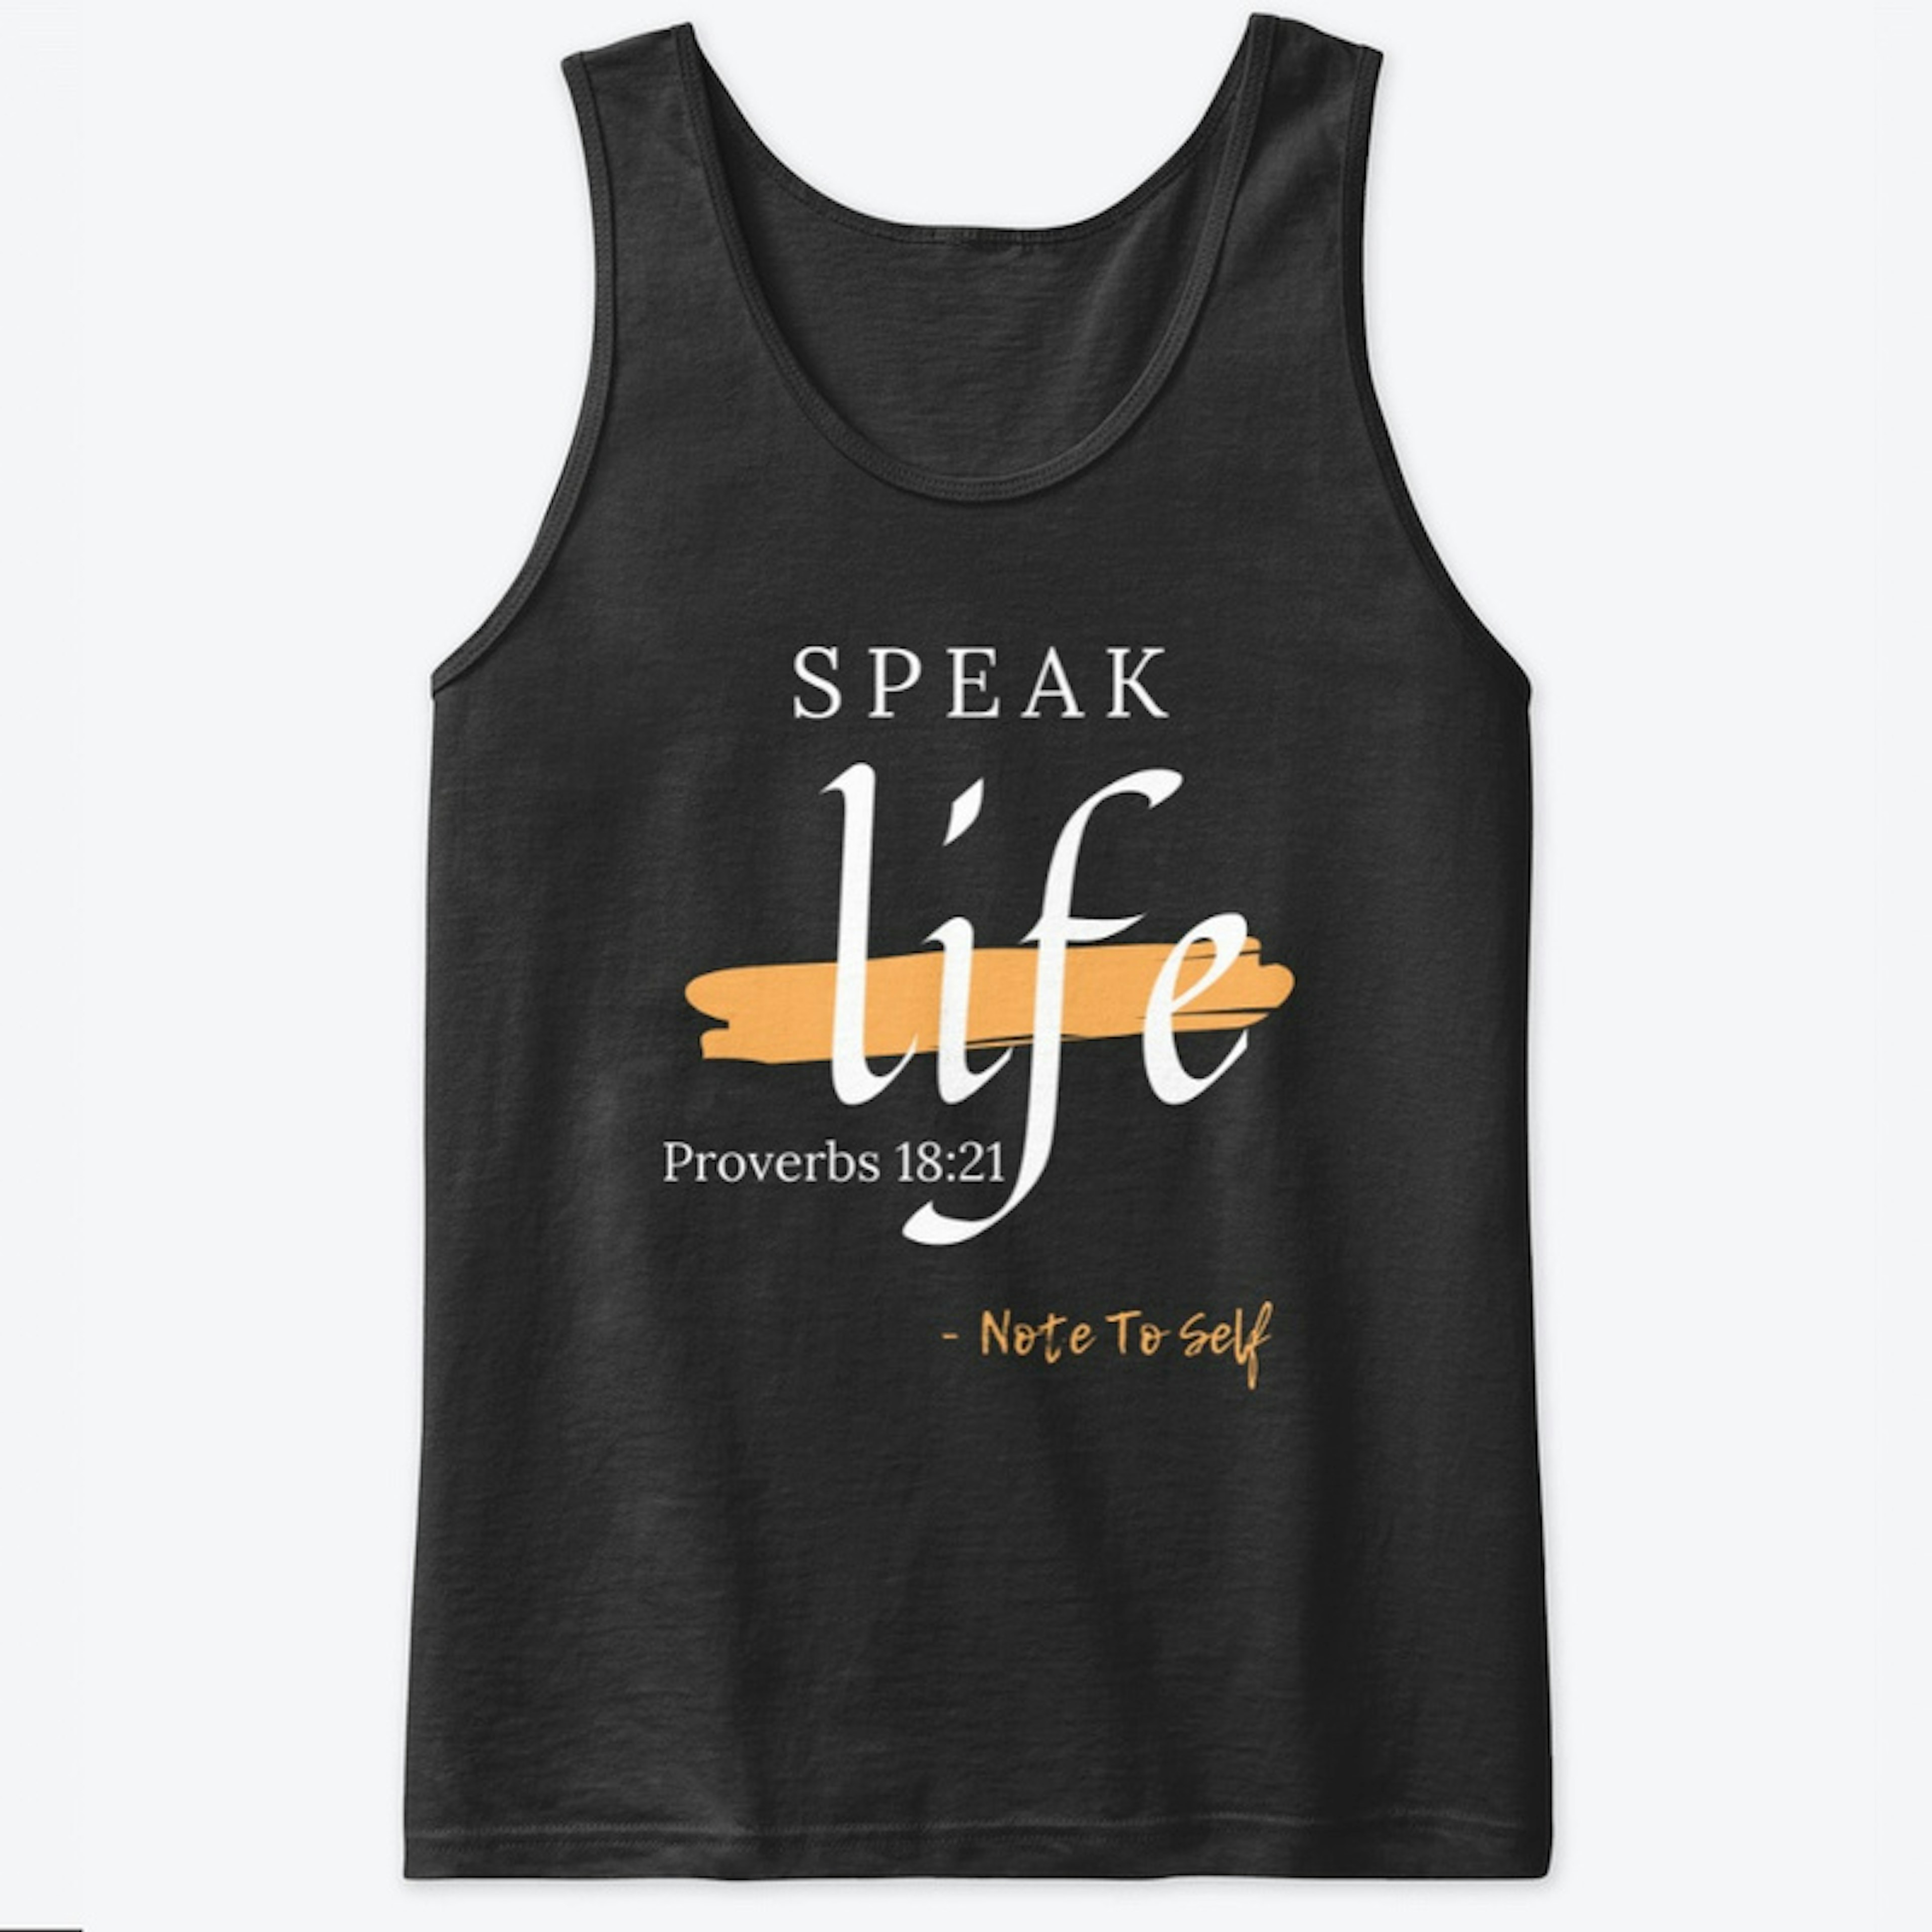 Speak Life - Proverbs 18:21